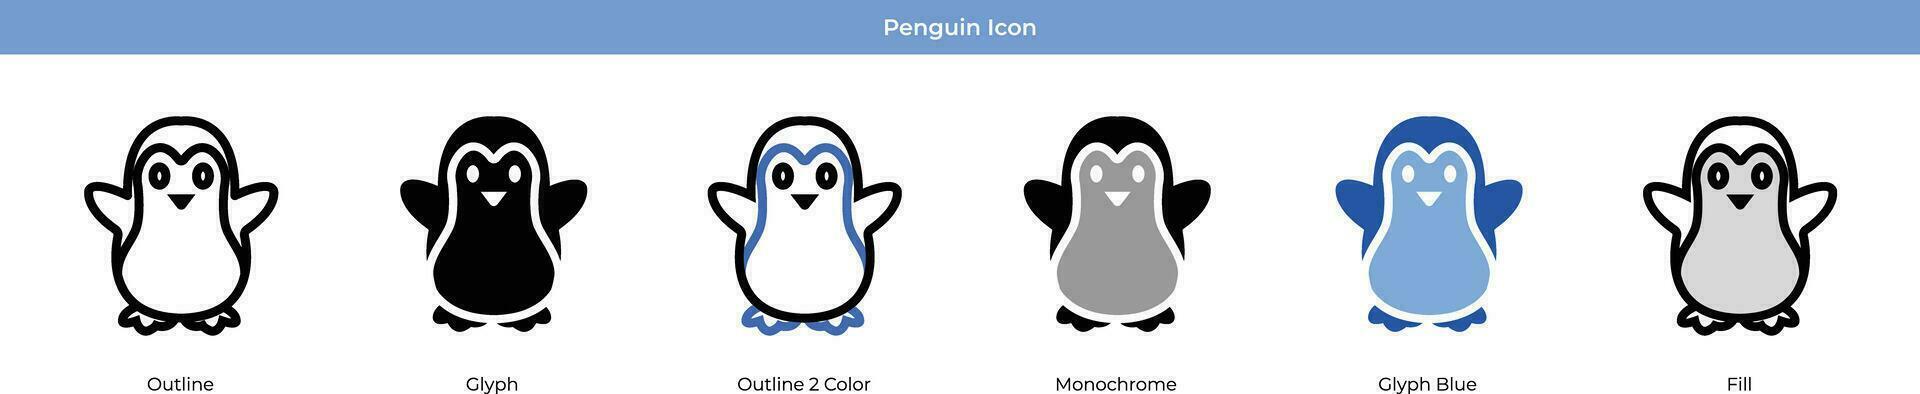 Penguin Icon Set vector